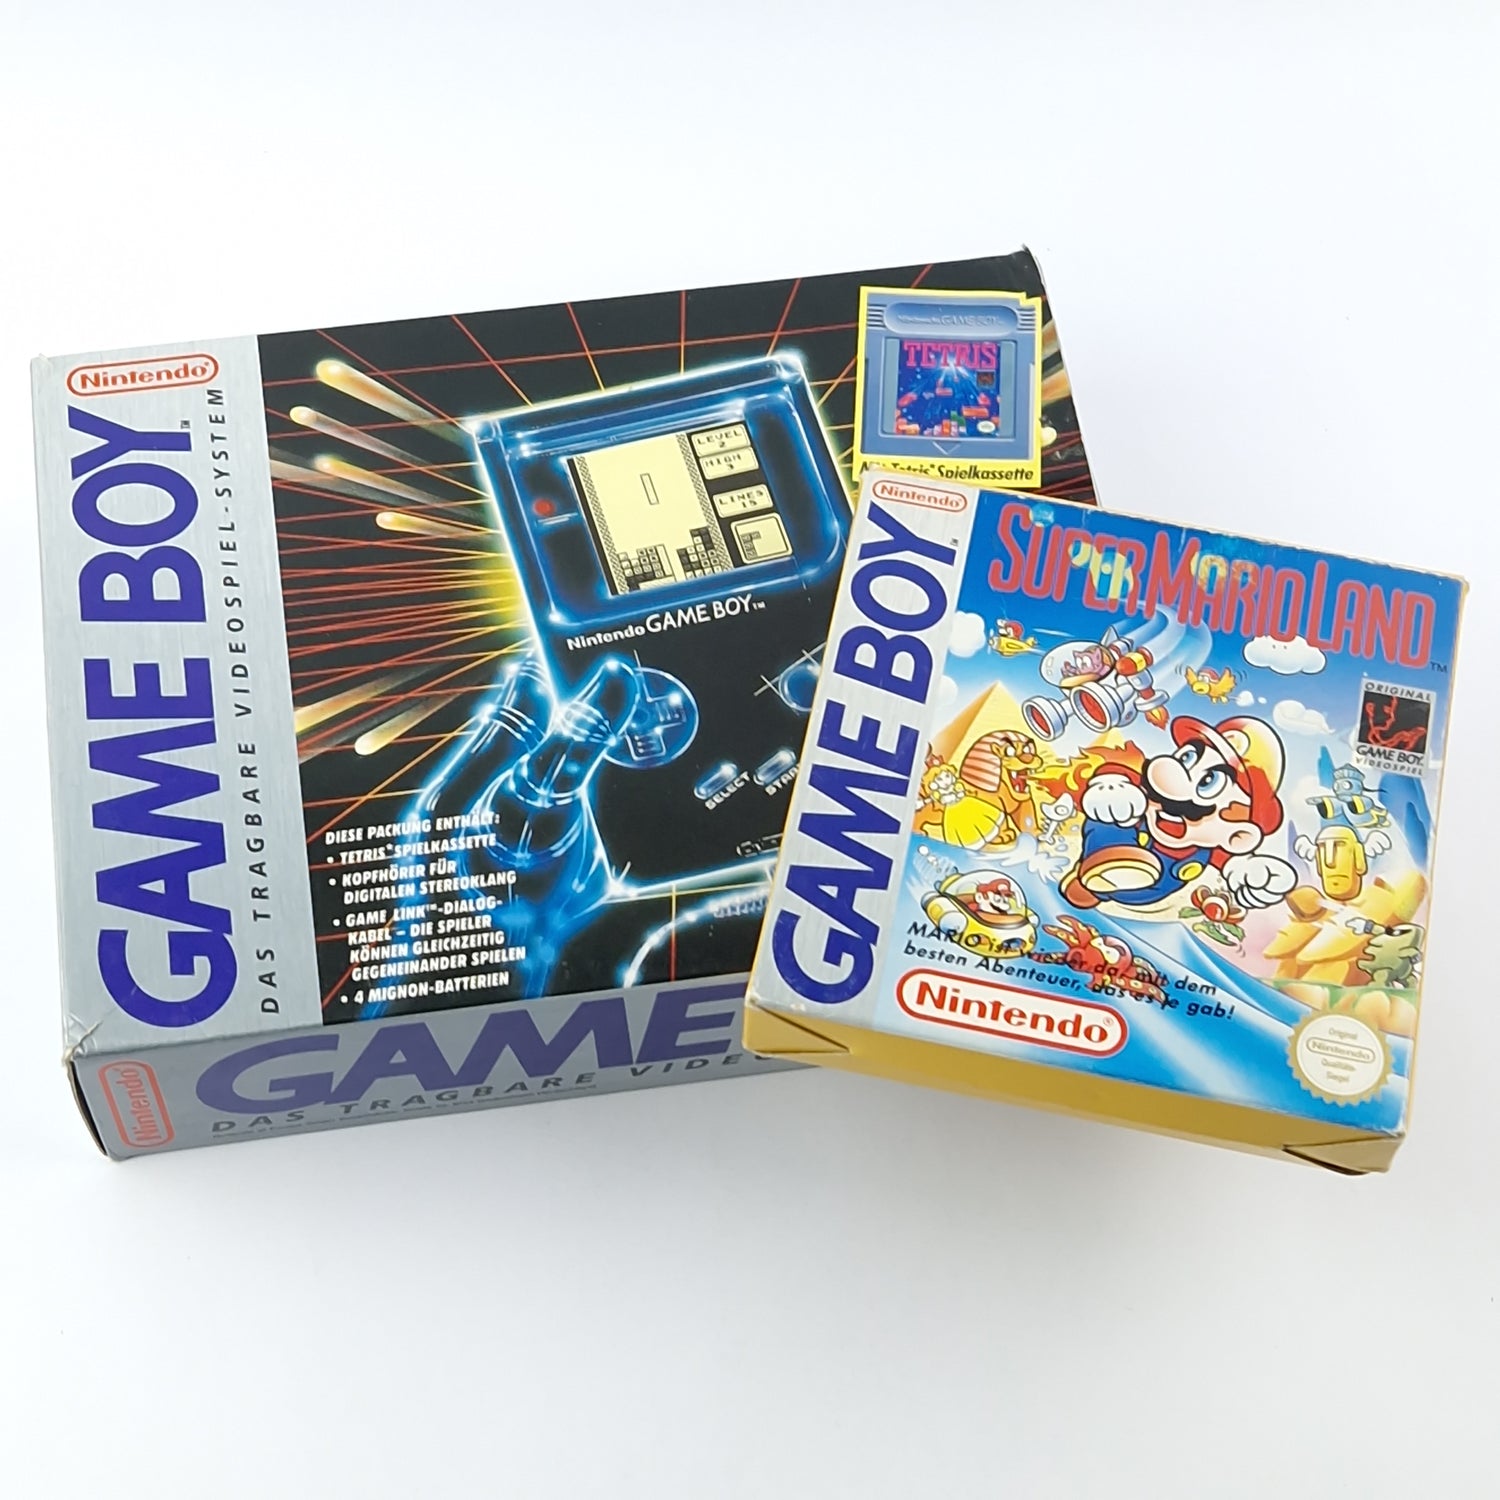 Nintendo Game Boy Classic Console in original packaging + Super Mario Land - Bundle GAMEBOY